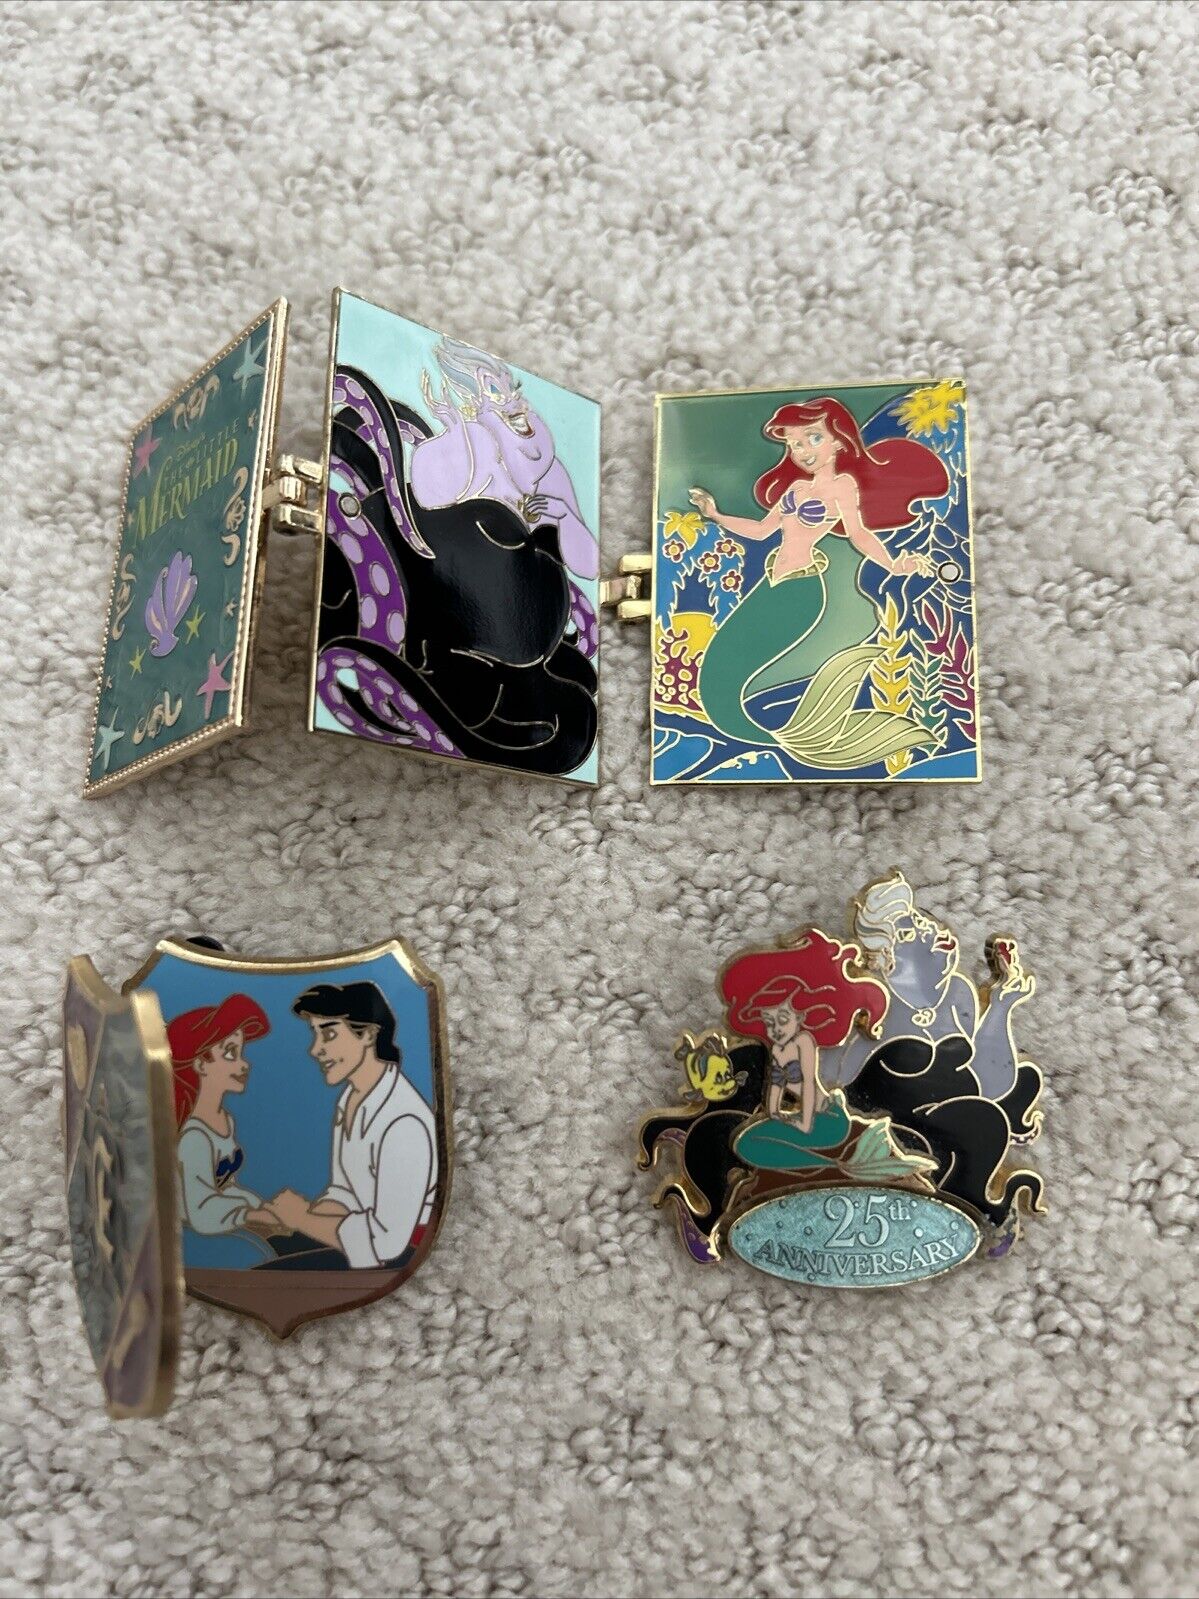 Limited Edition Little Mermaid/Ariel Disney Pins